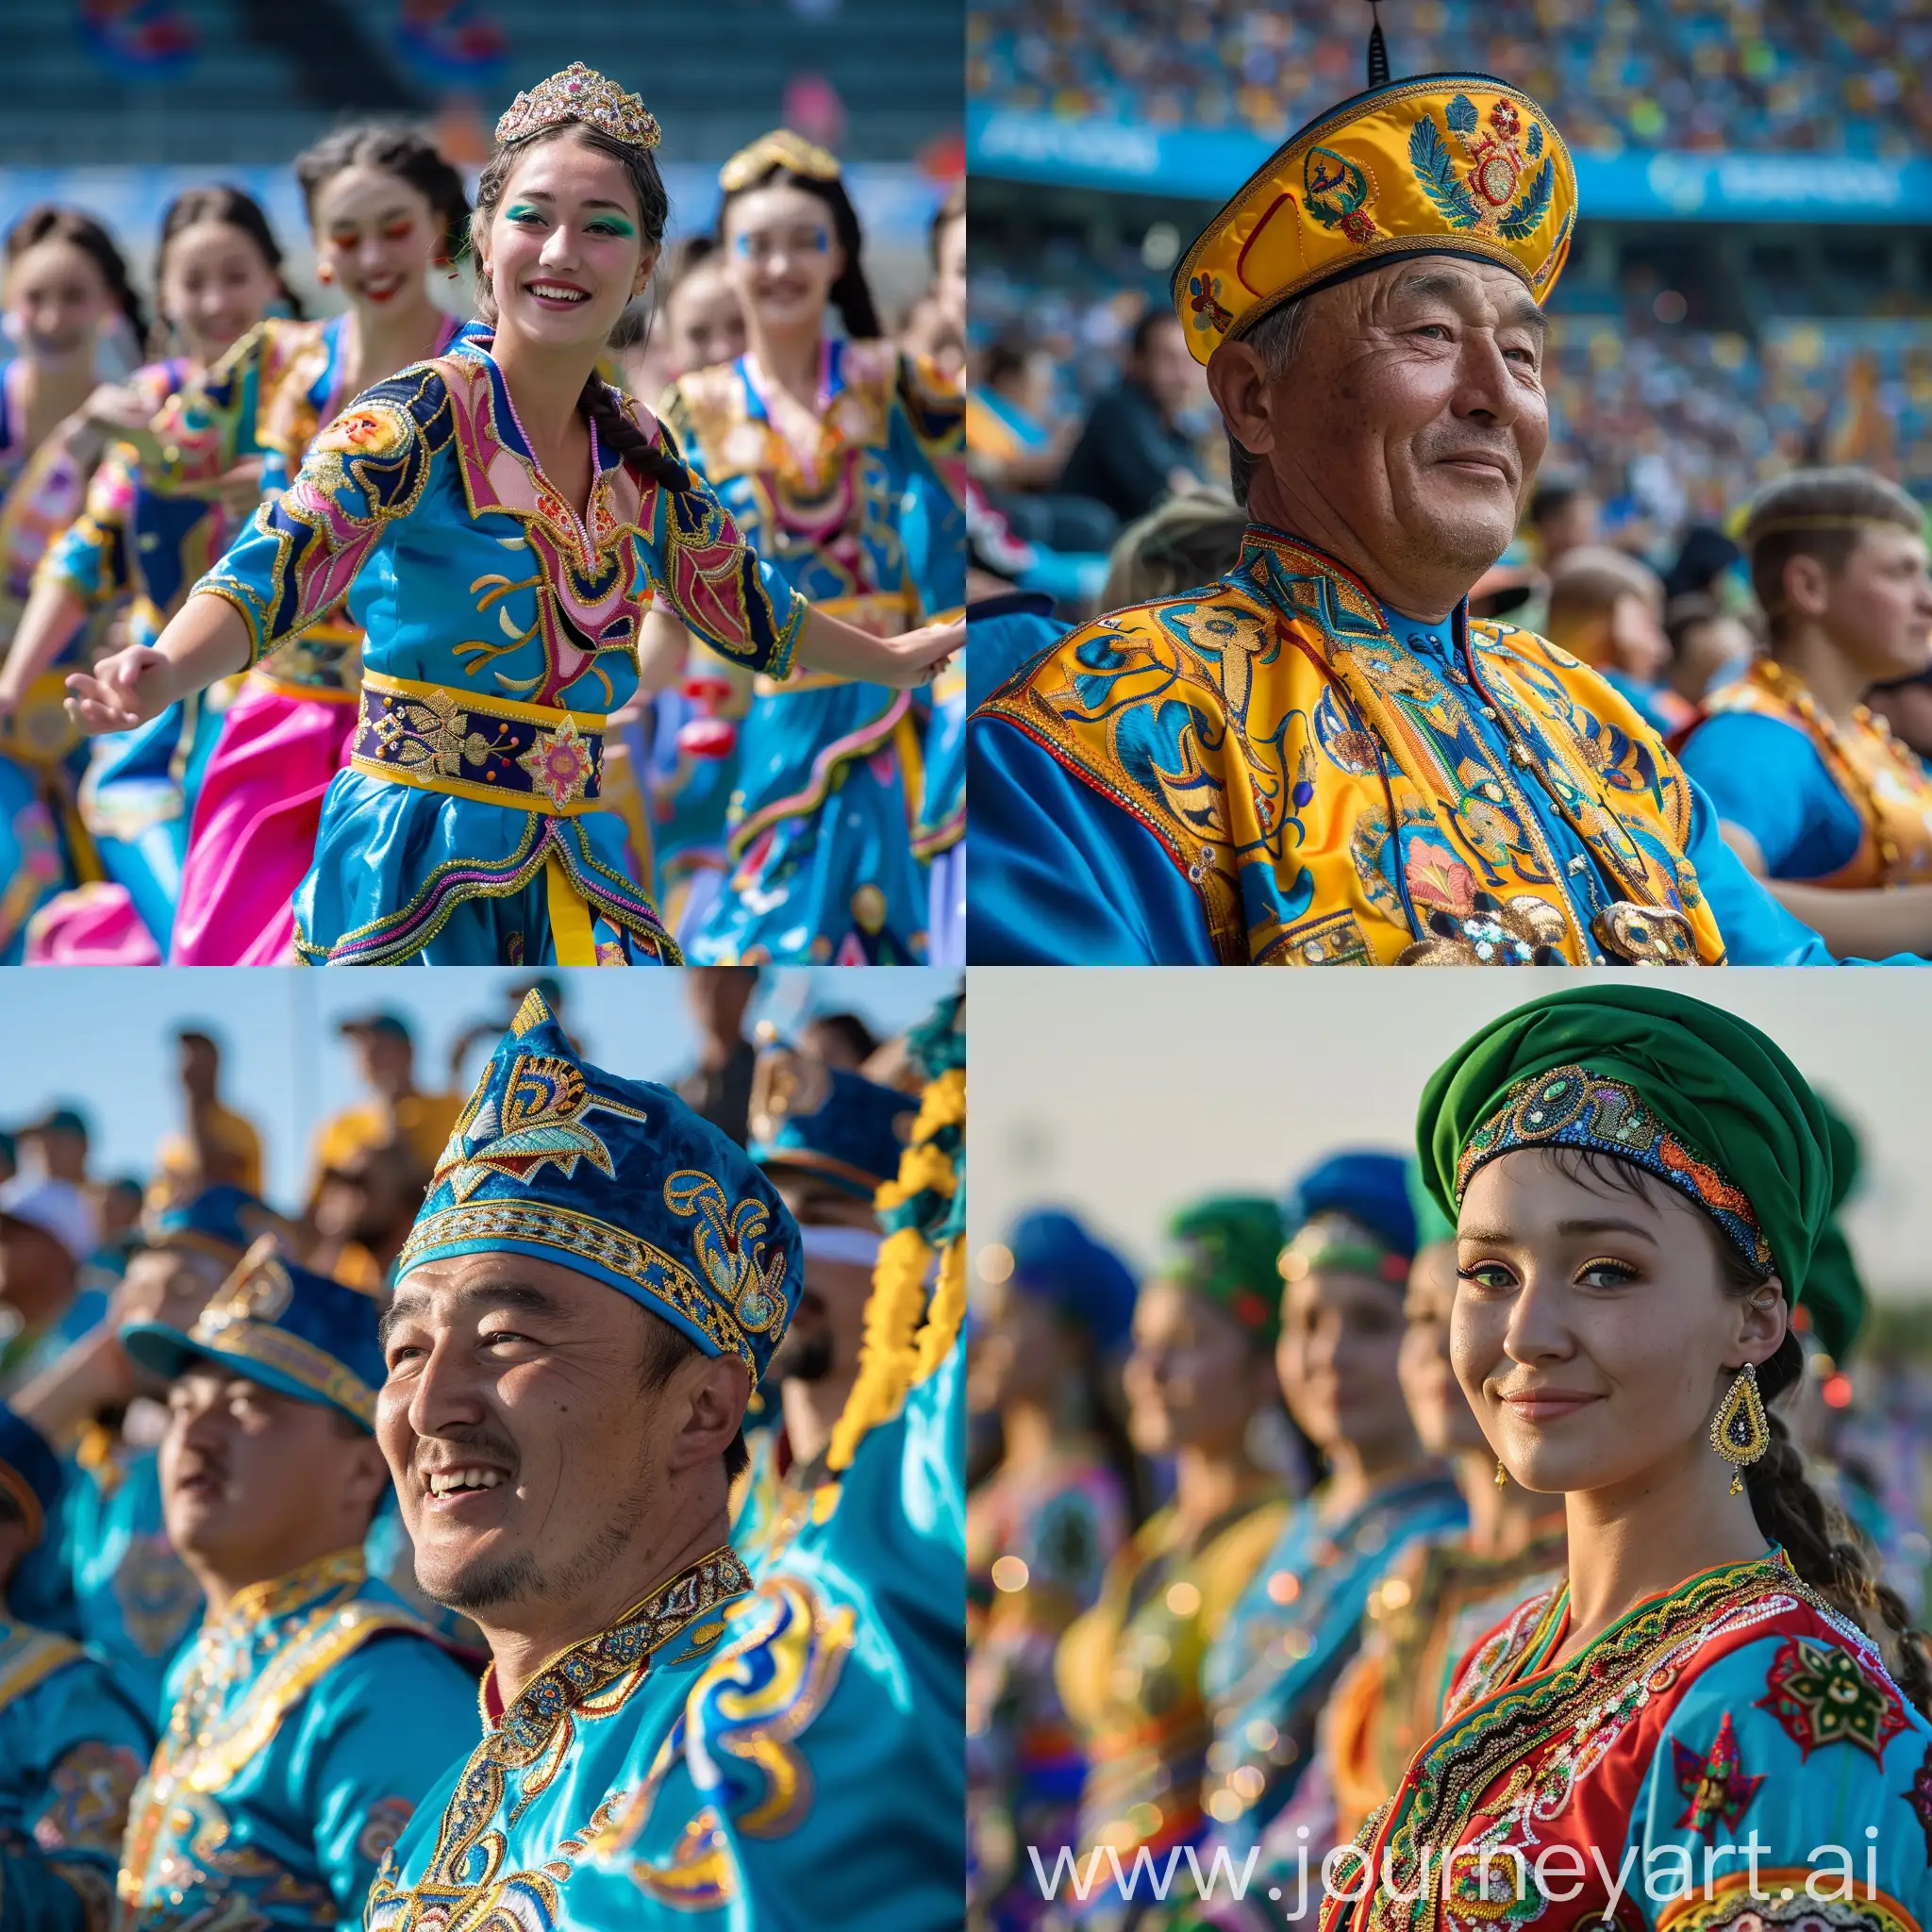 Traditional-Kazakh-National-Games-Cultural-Celebration-in-Square-Format